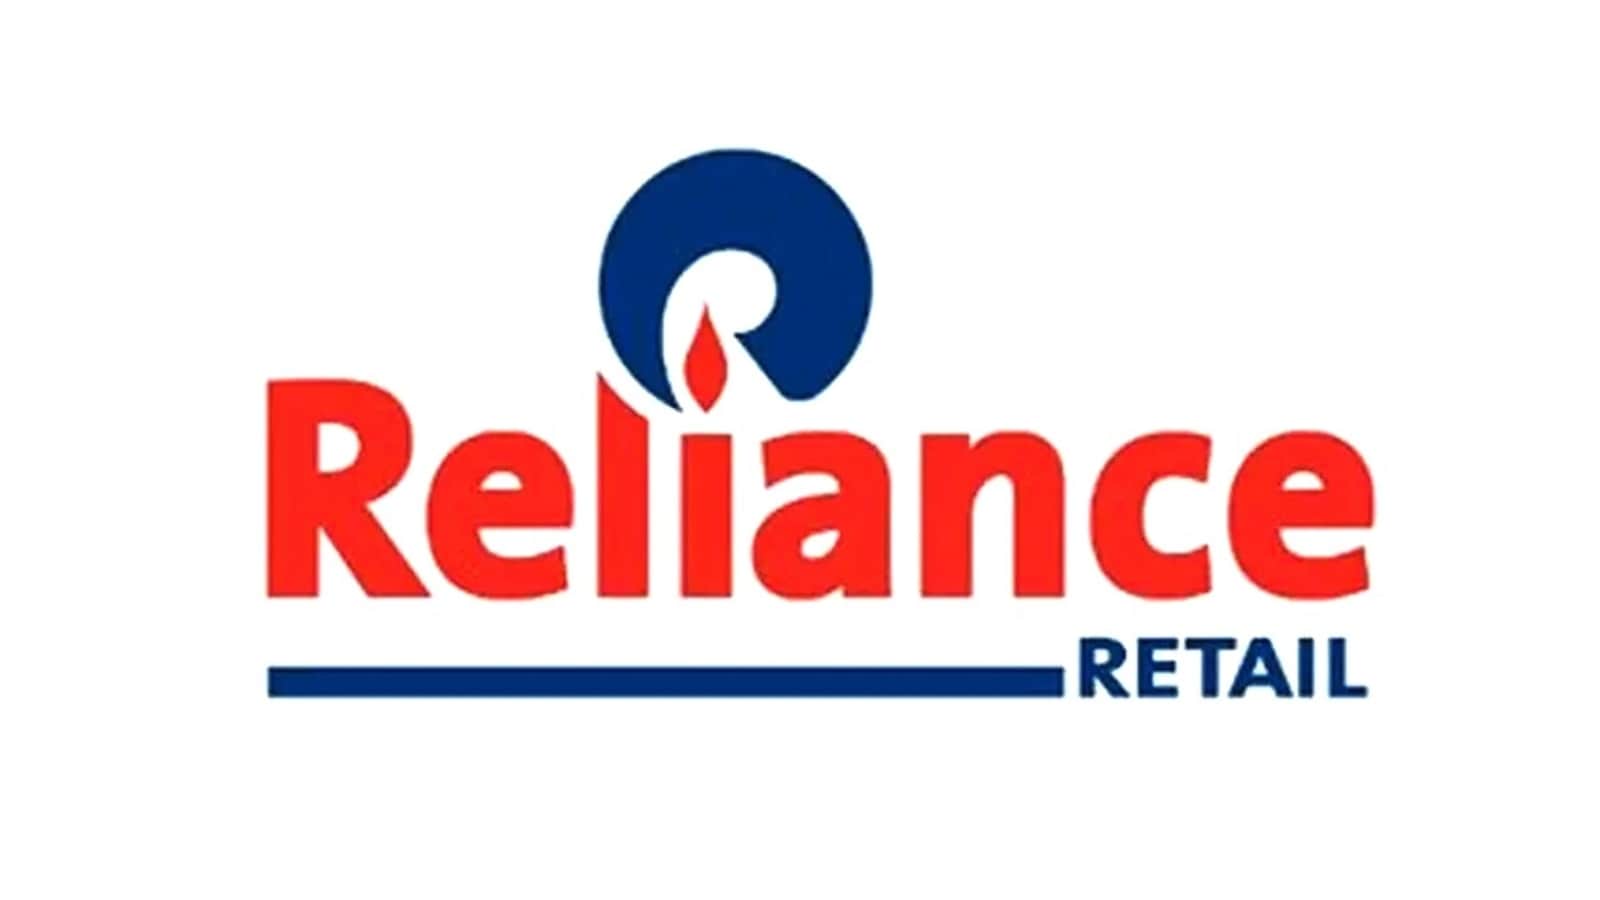 Reliance Retail set to enter salon business: Report - Hindustan Times